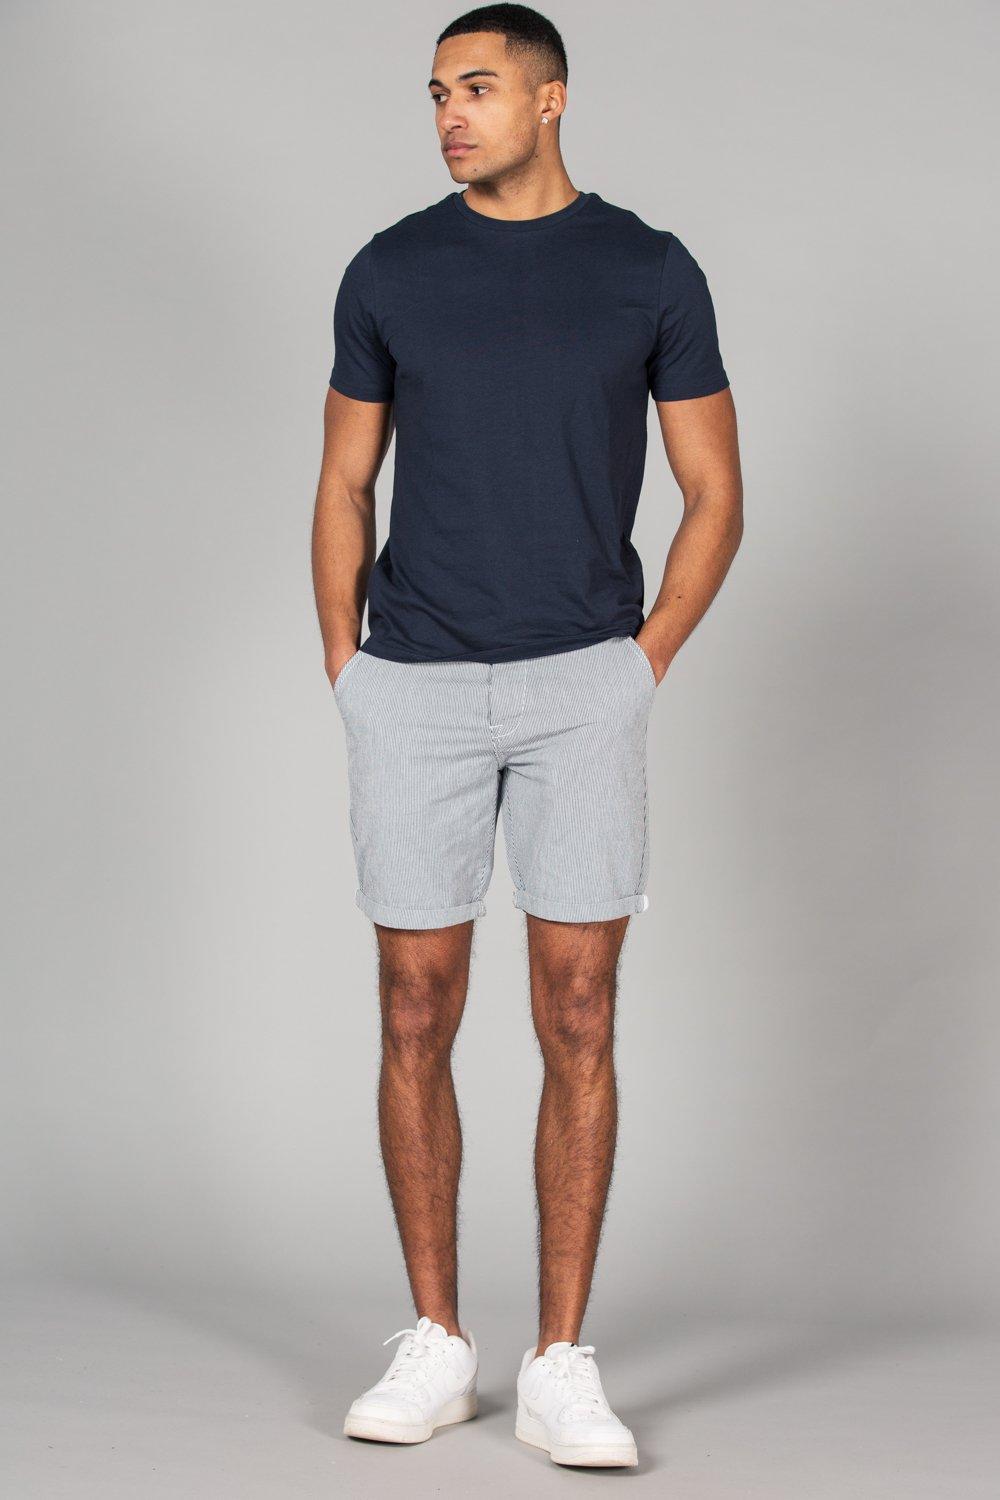 Men's Shorts For Sale